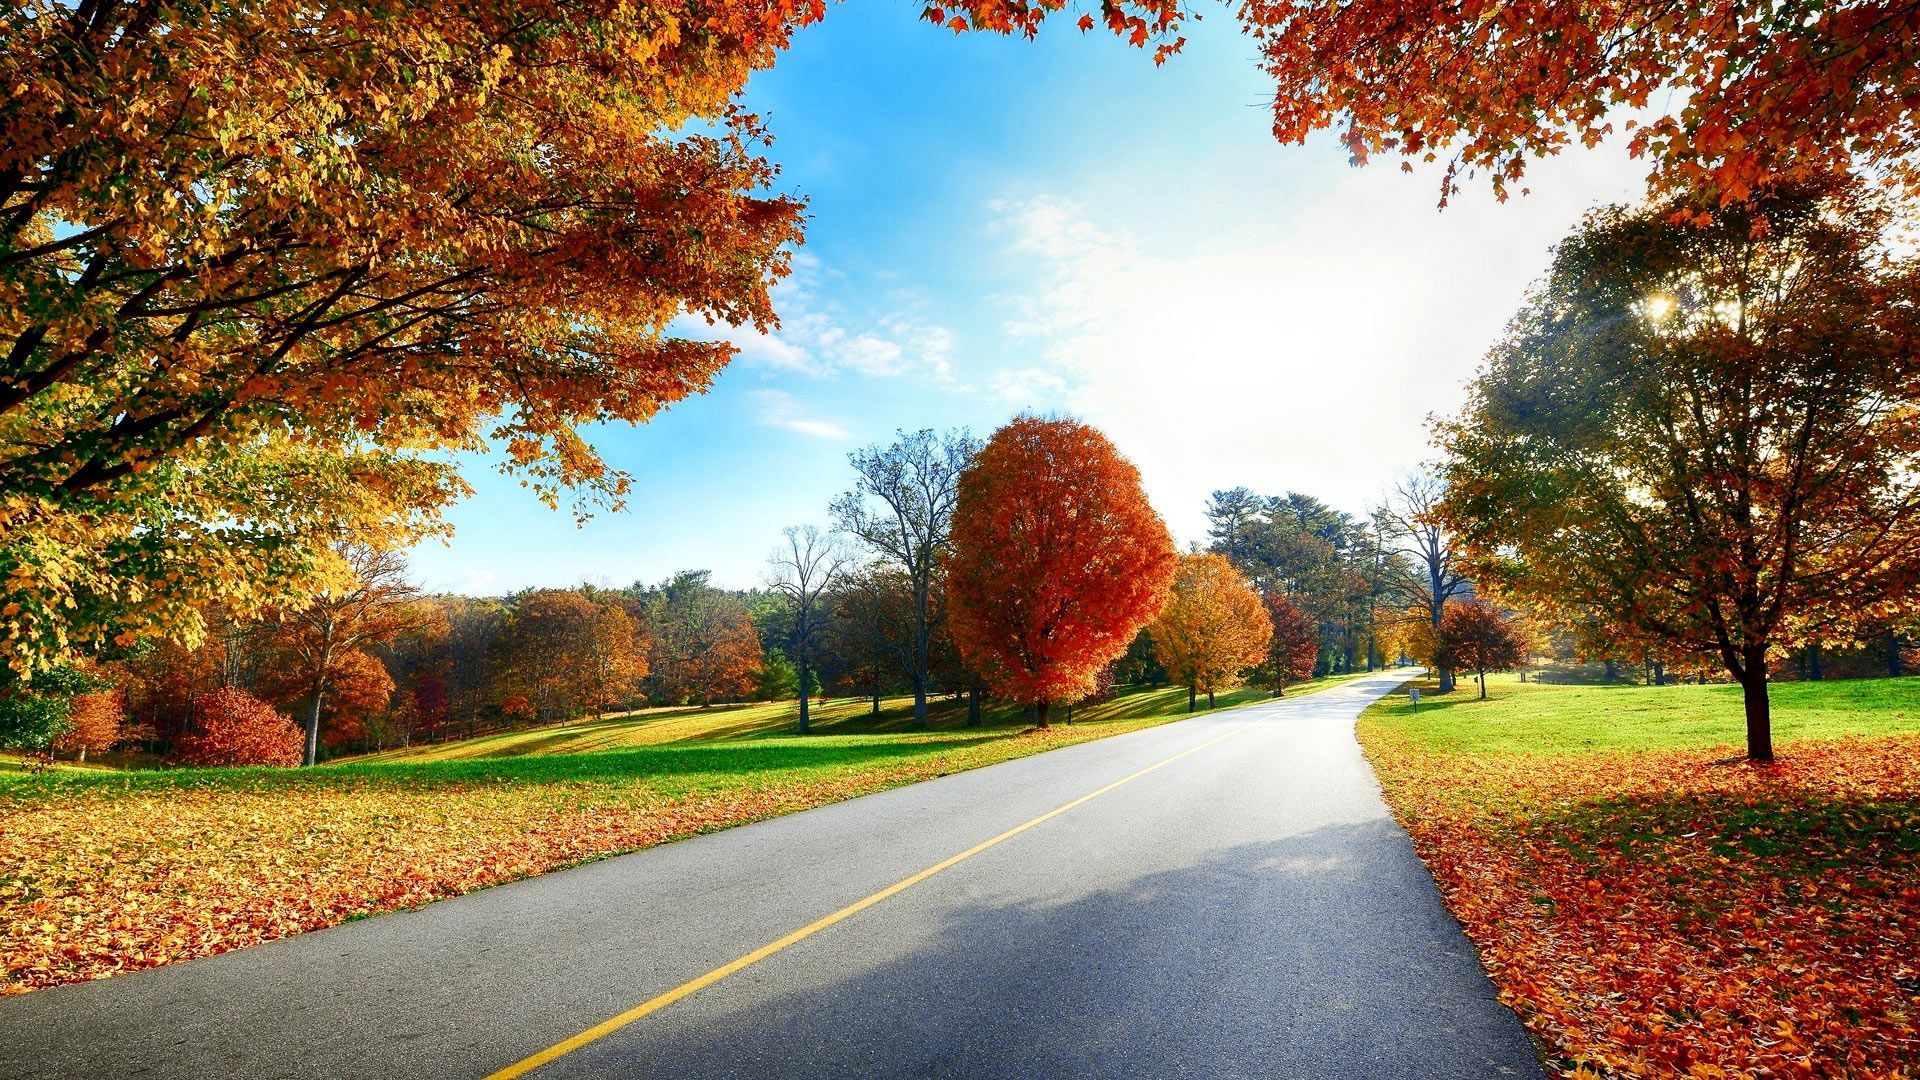 Beautiful autumn road scenery wallpapers – Free full hd wallpapers ...